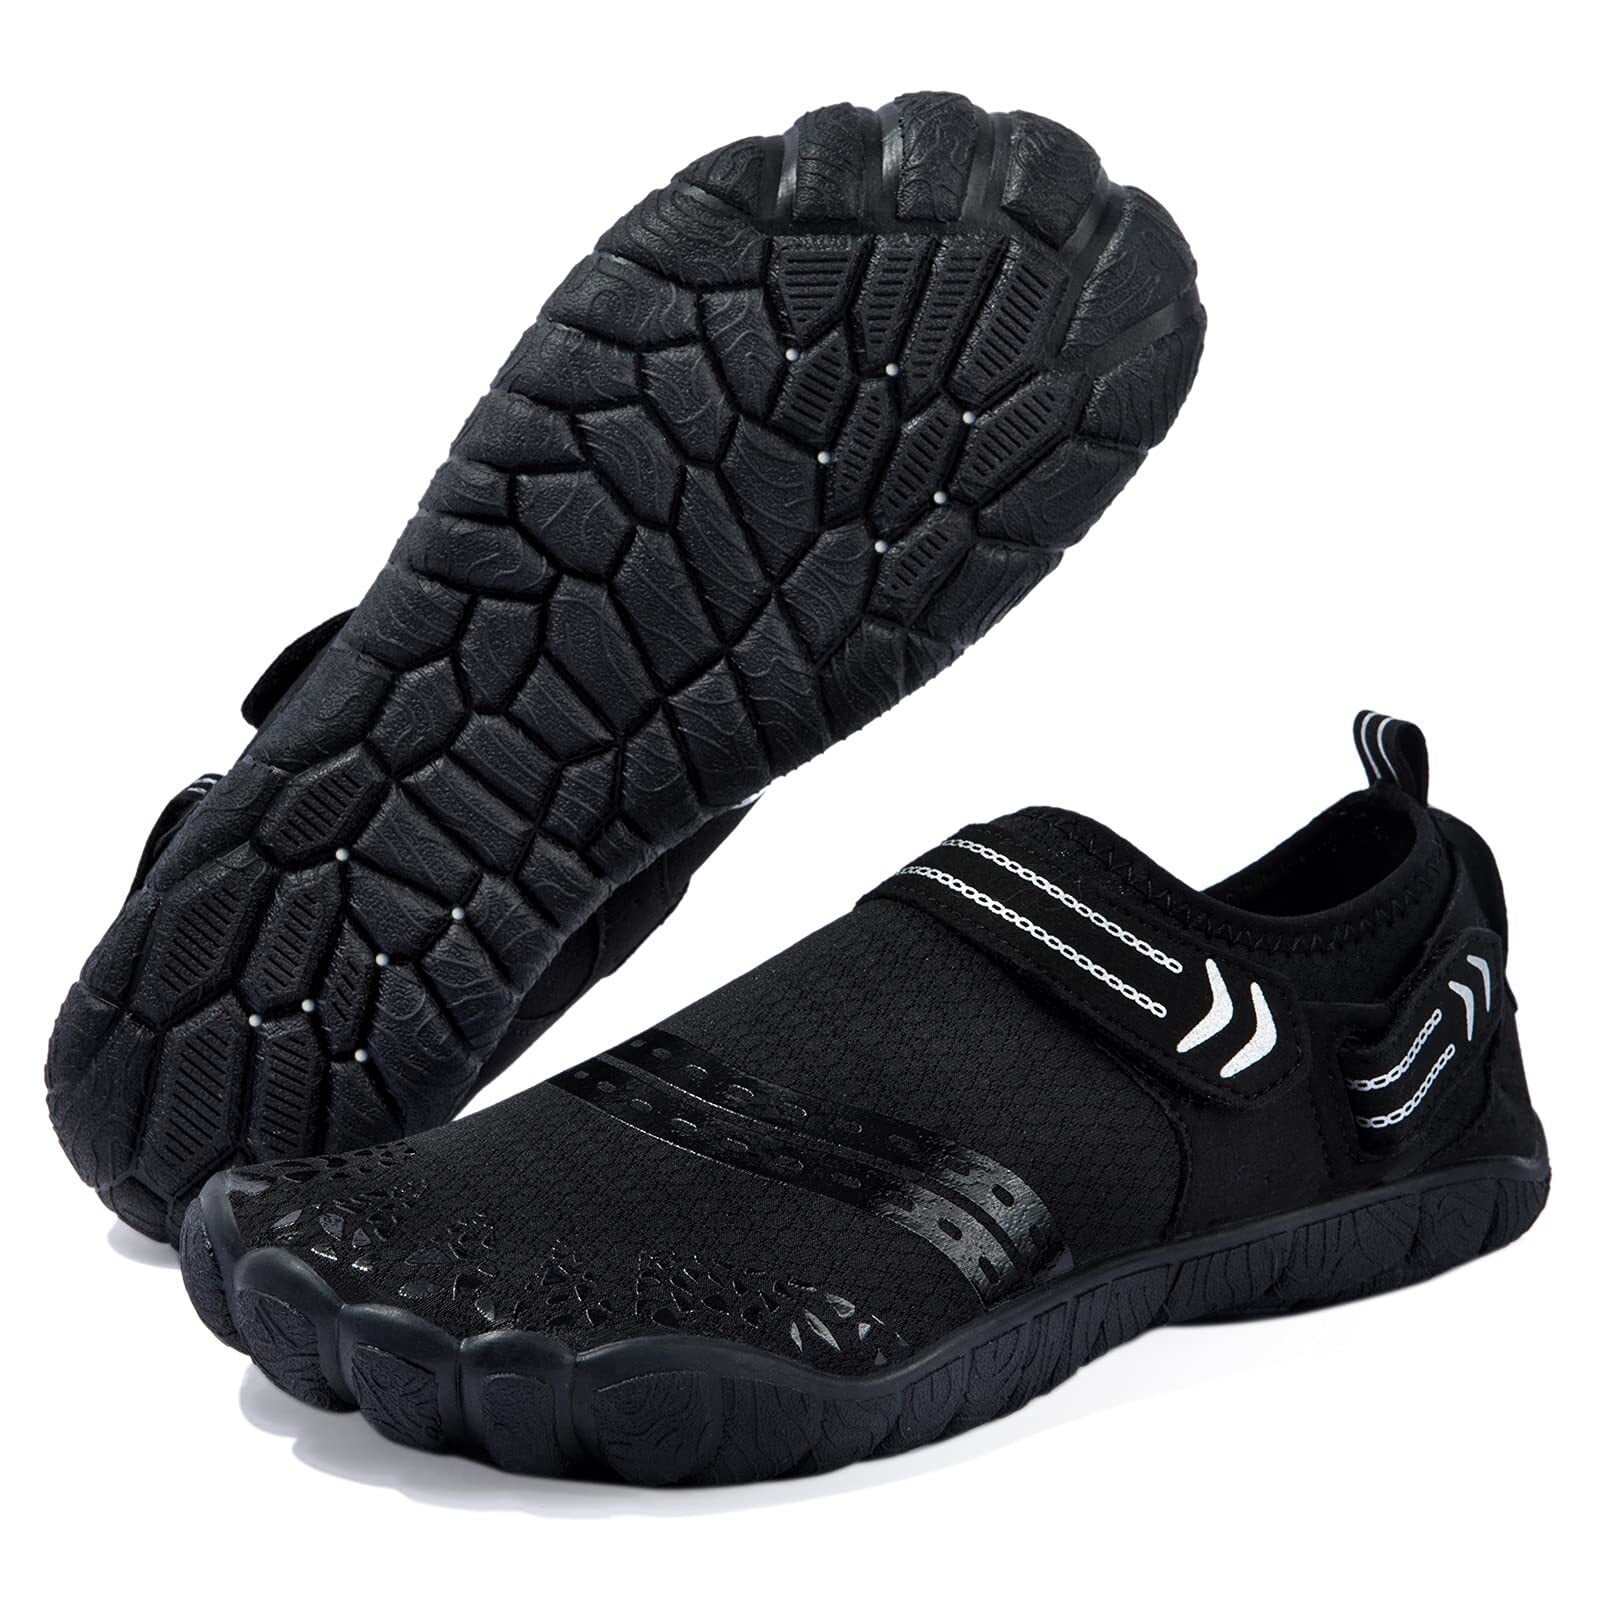 Needbo Men's Water Sneakers Beach Shoes Barefoot Surfing Shoes Black ...